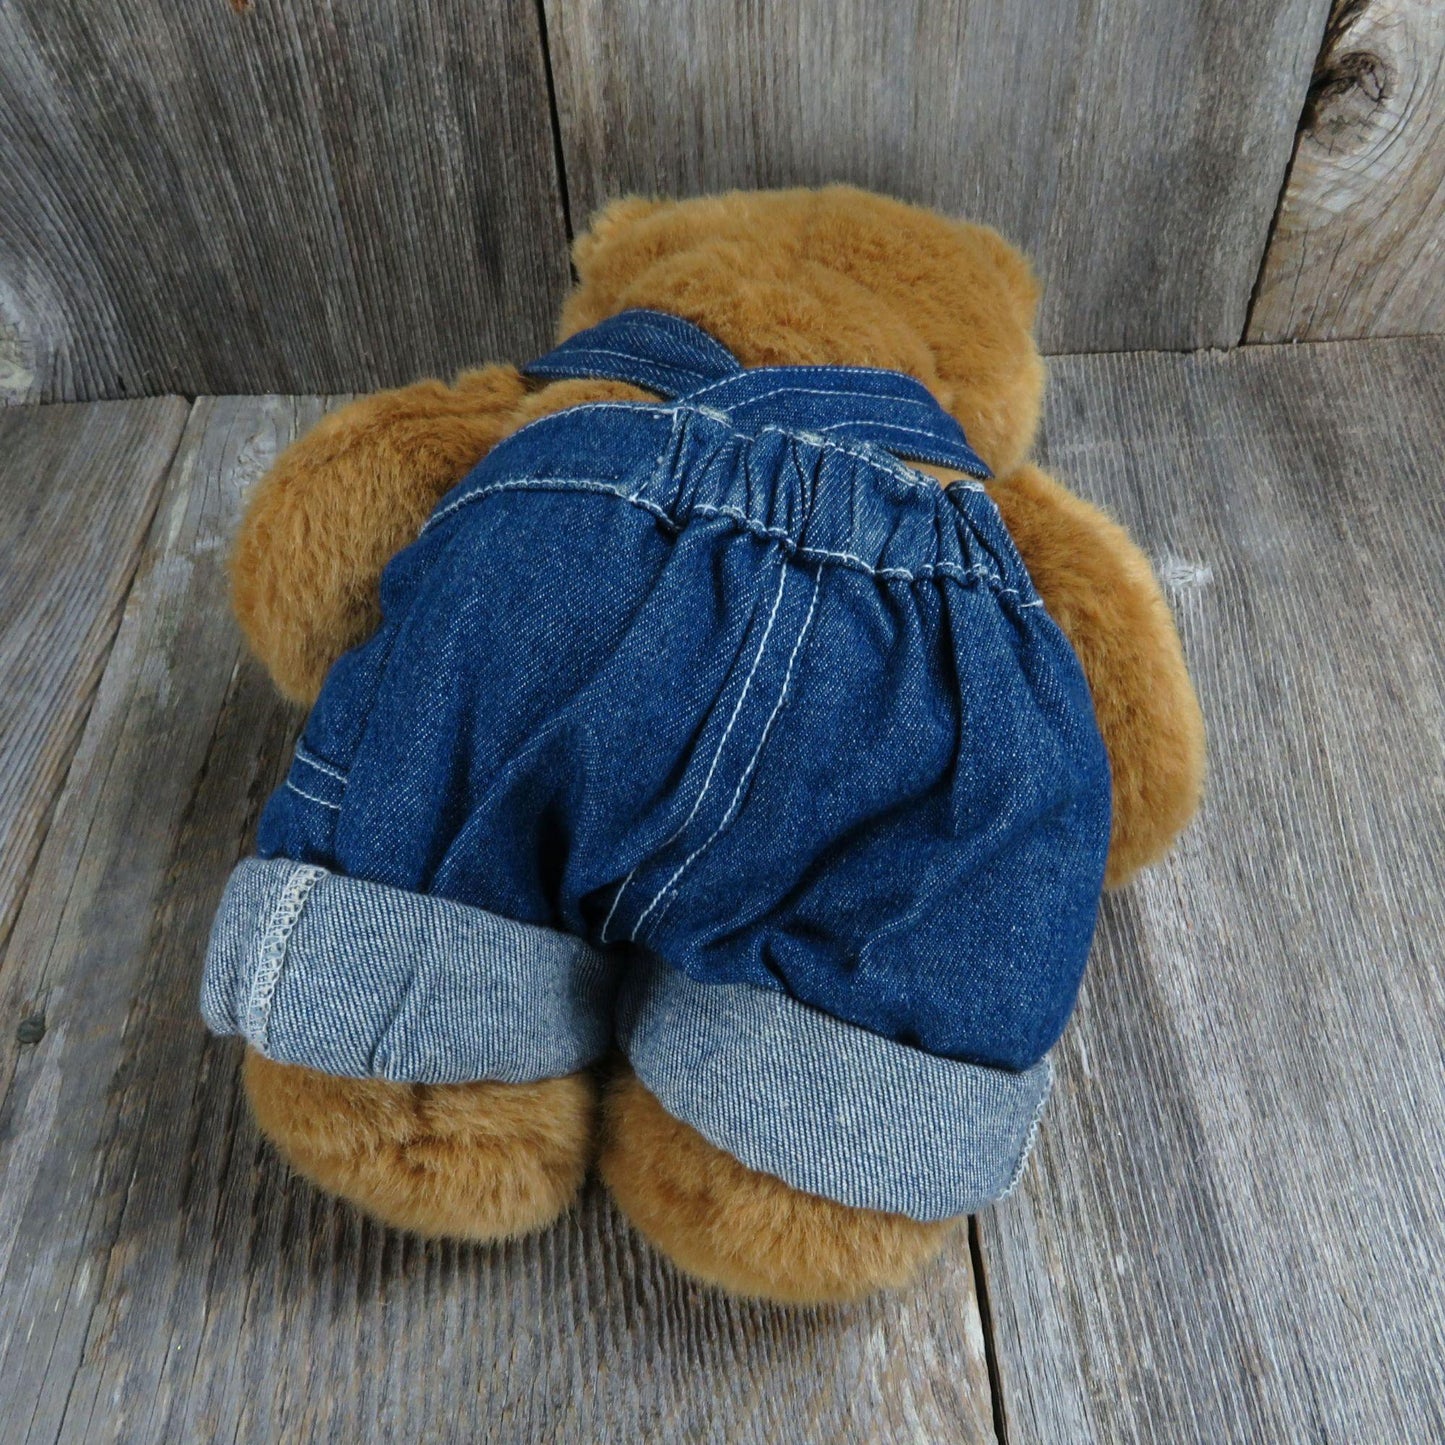 Vintage Build A Bear Light Brown Teddy Plush Overalls Stuffed Animal 11 Inch 1997 90s BABW